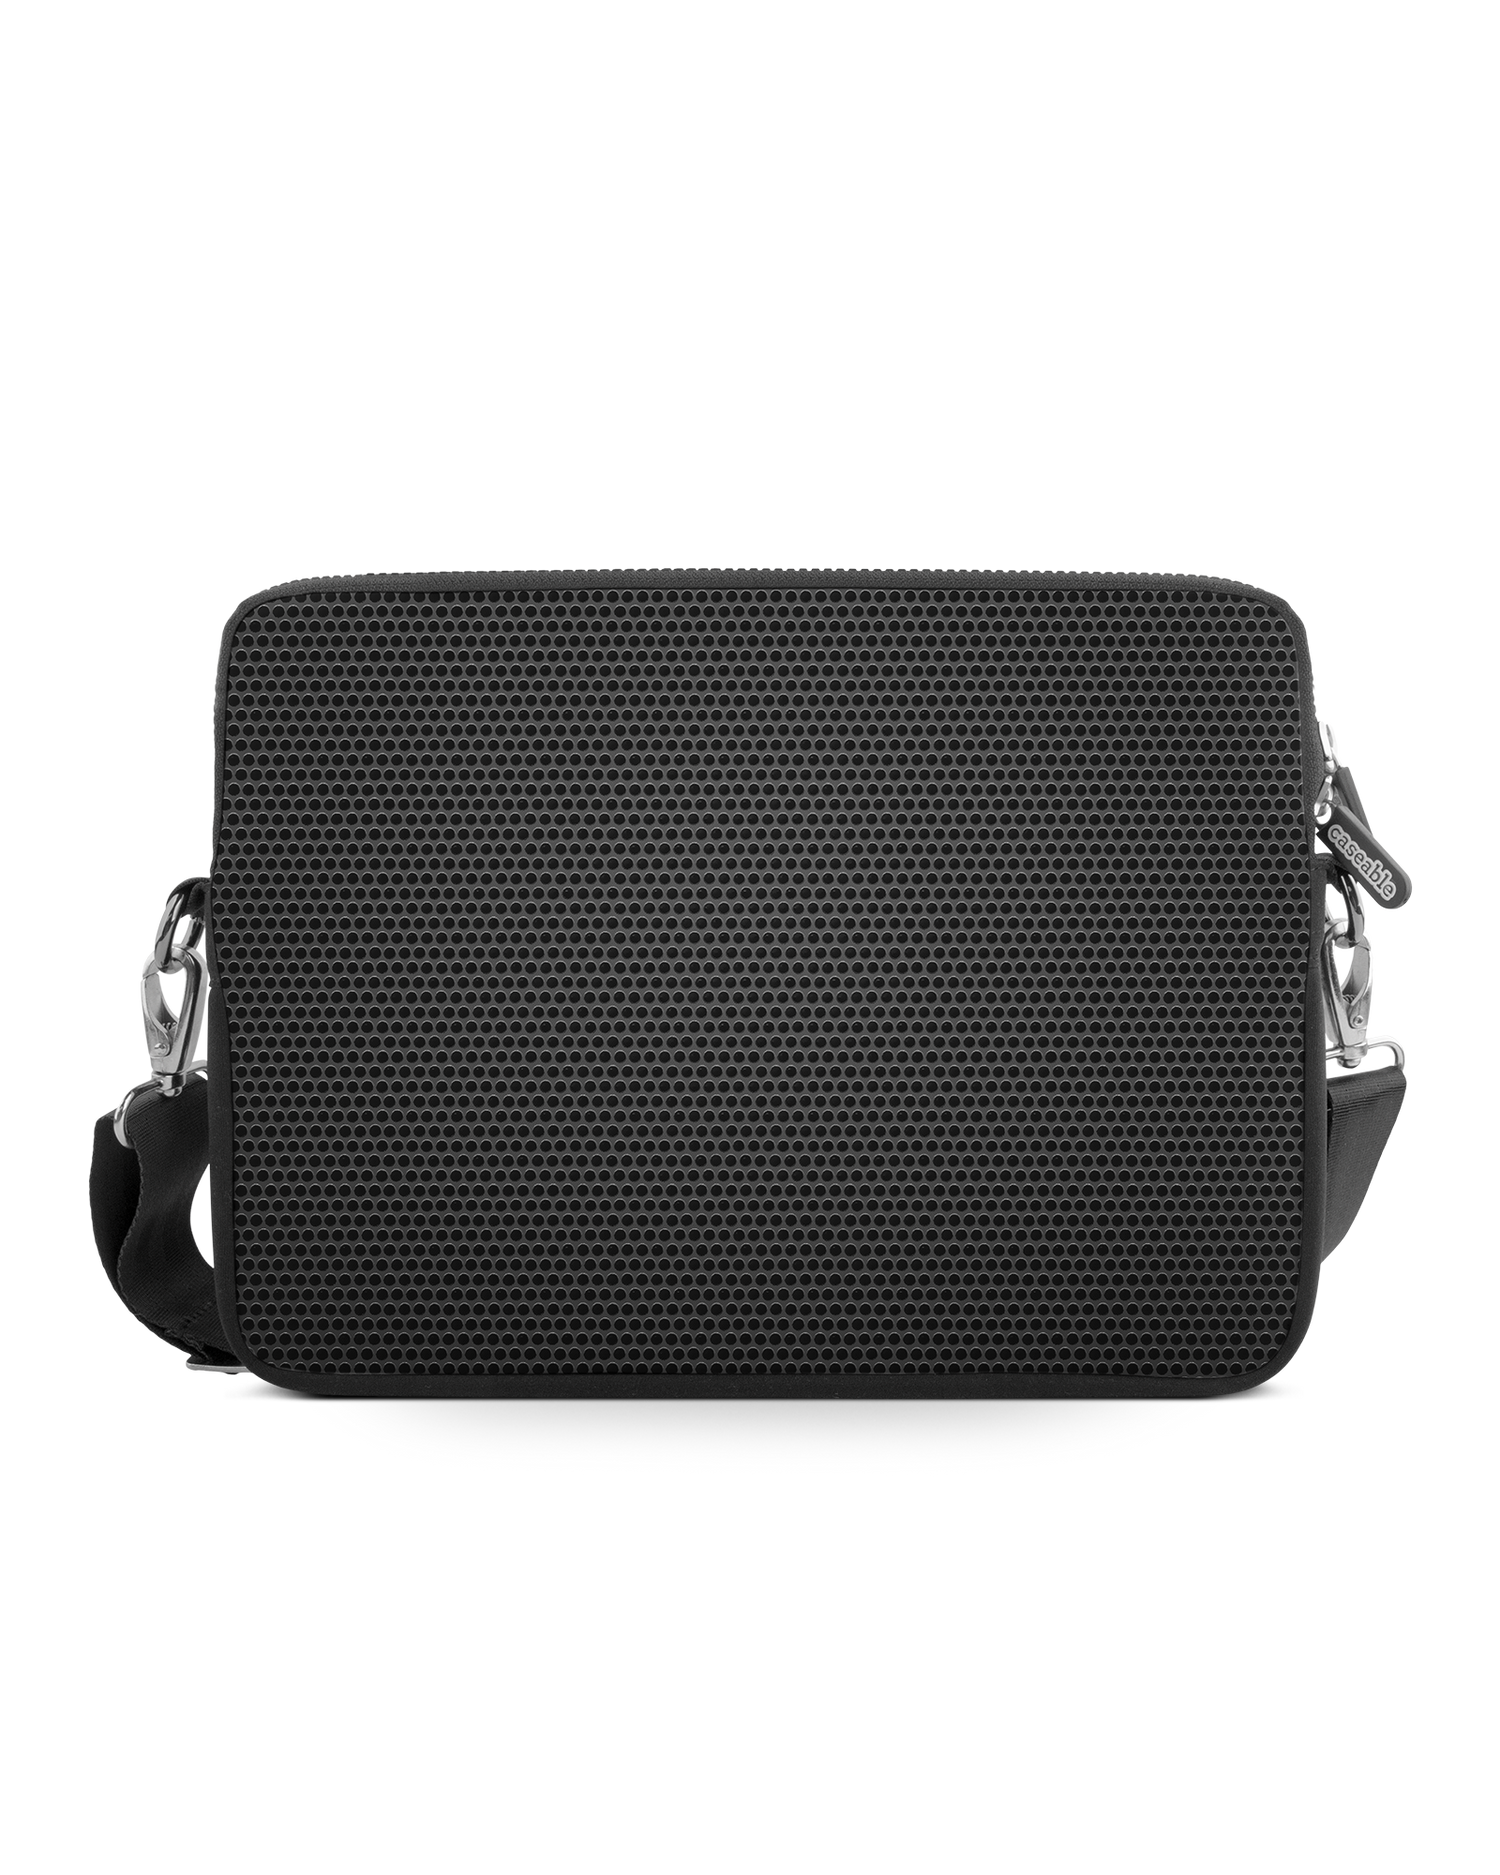 Carbon II Premium Laptop Bag 17 inch: Front View